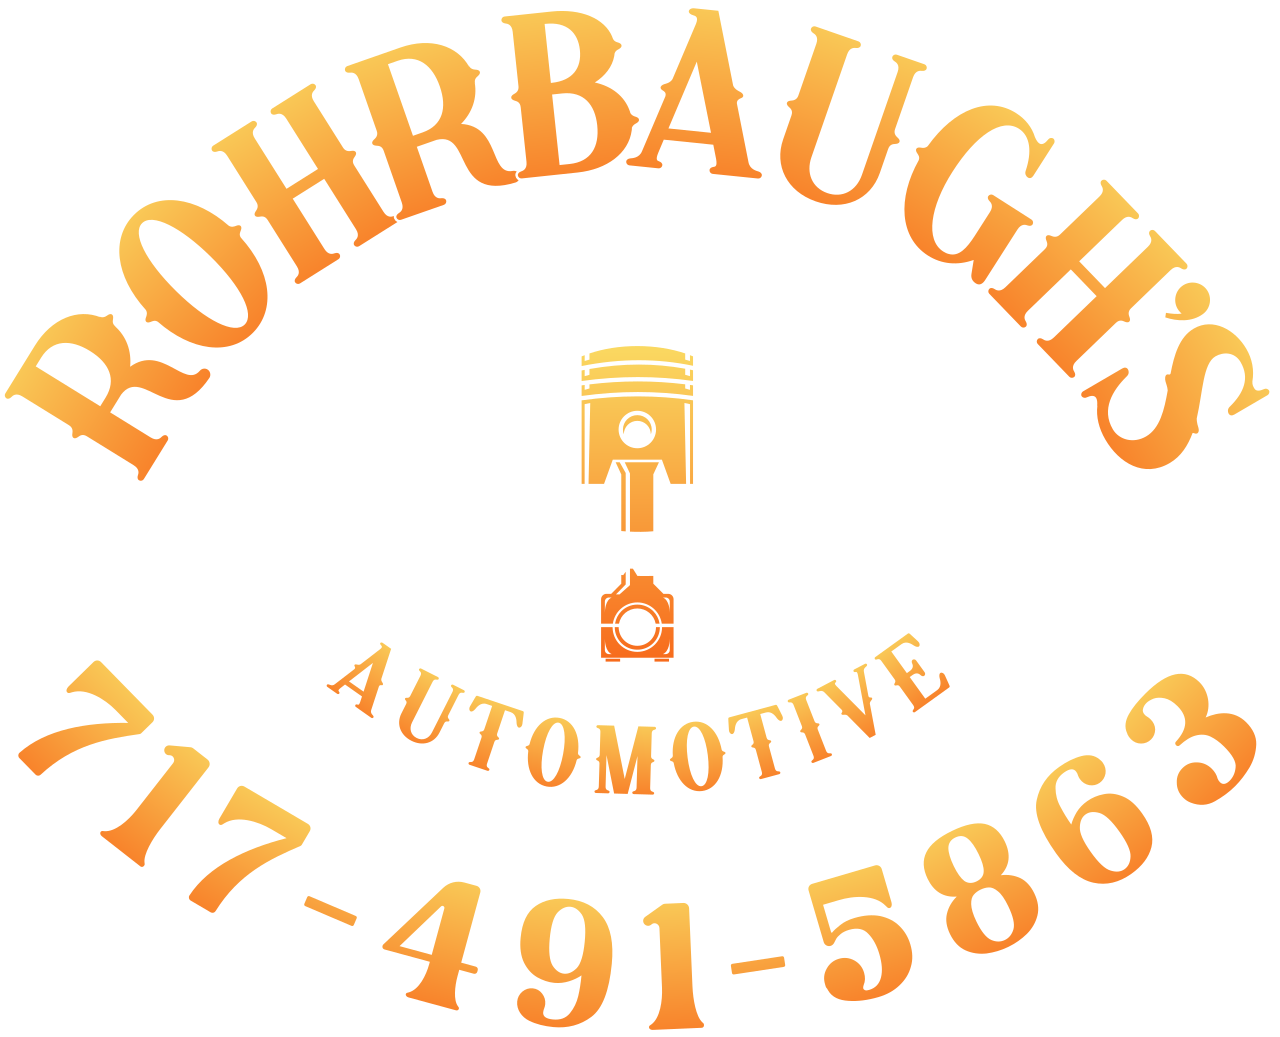 ROHRBAUGH'S's logo